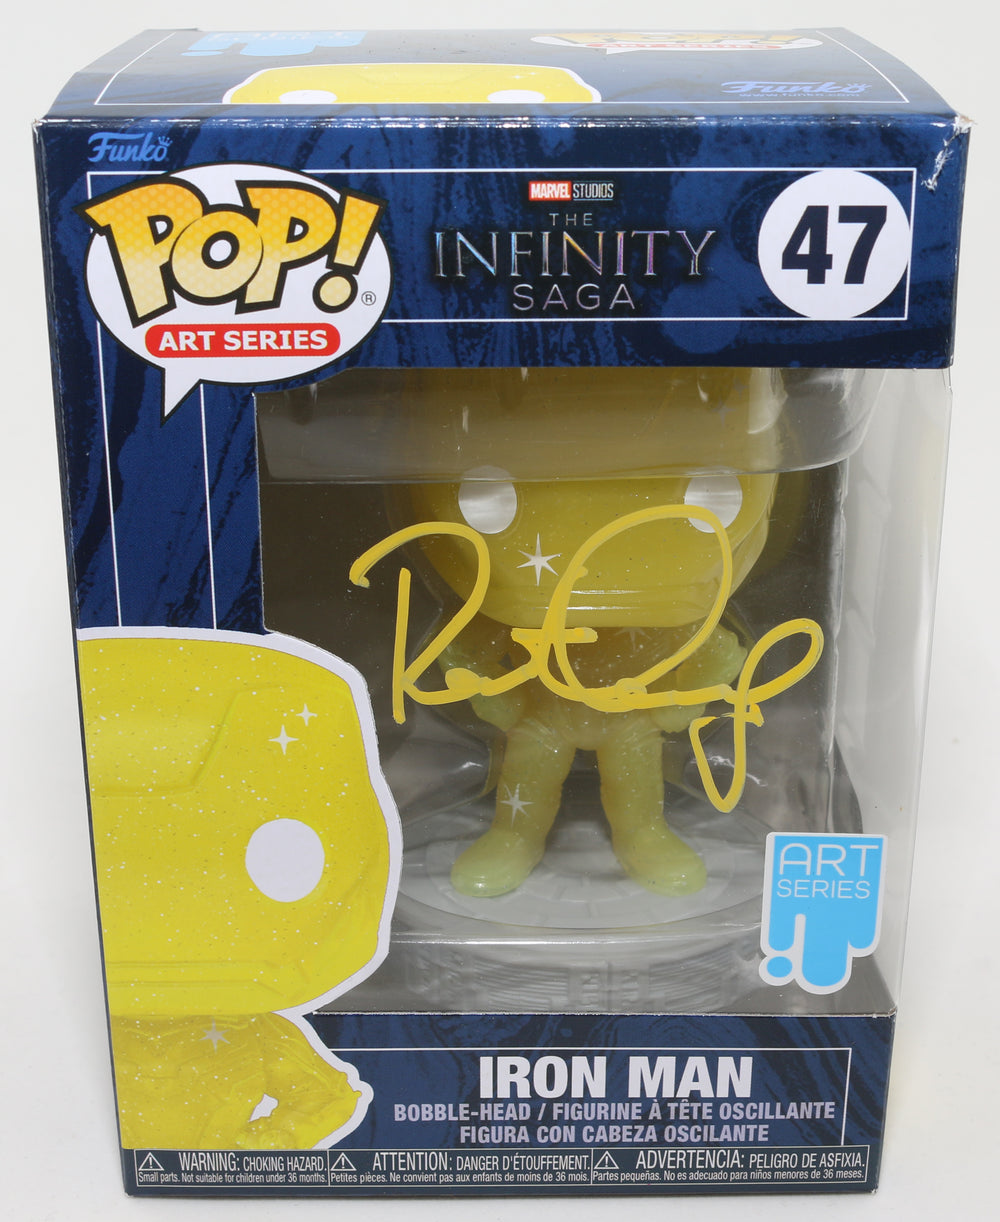 Robert Downey Jr. as Iron Man in Marvel's The Infinity Saga (SWAU) Signed POP! Art Series Yellow Funko